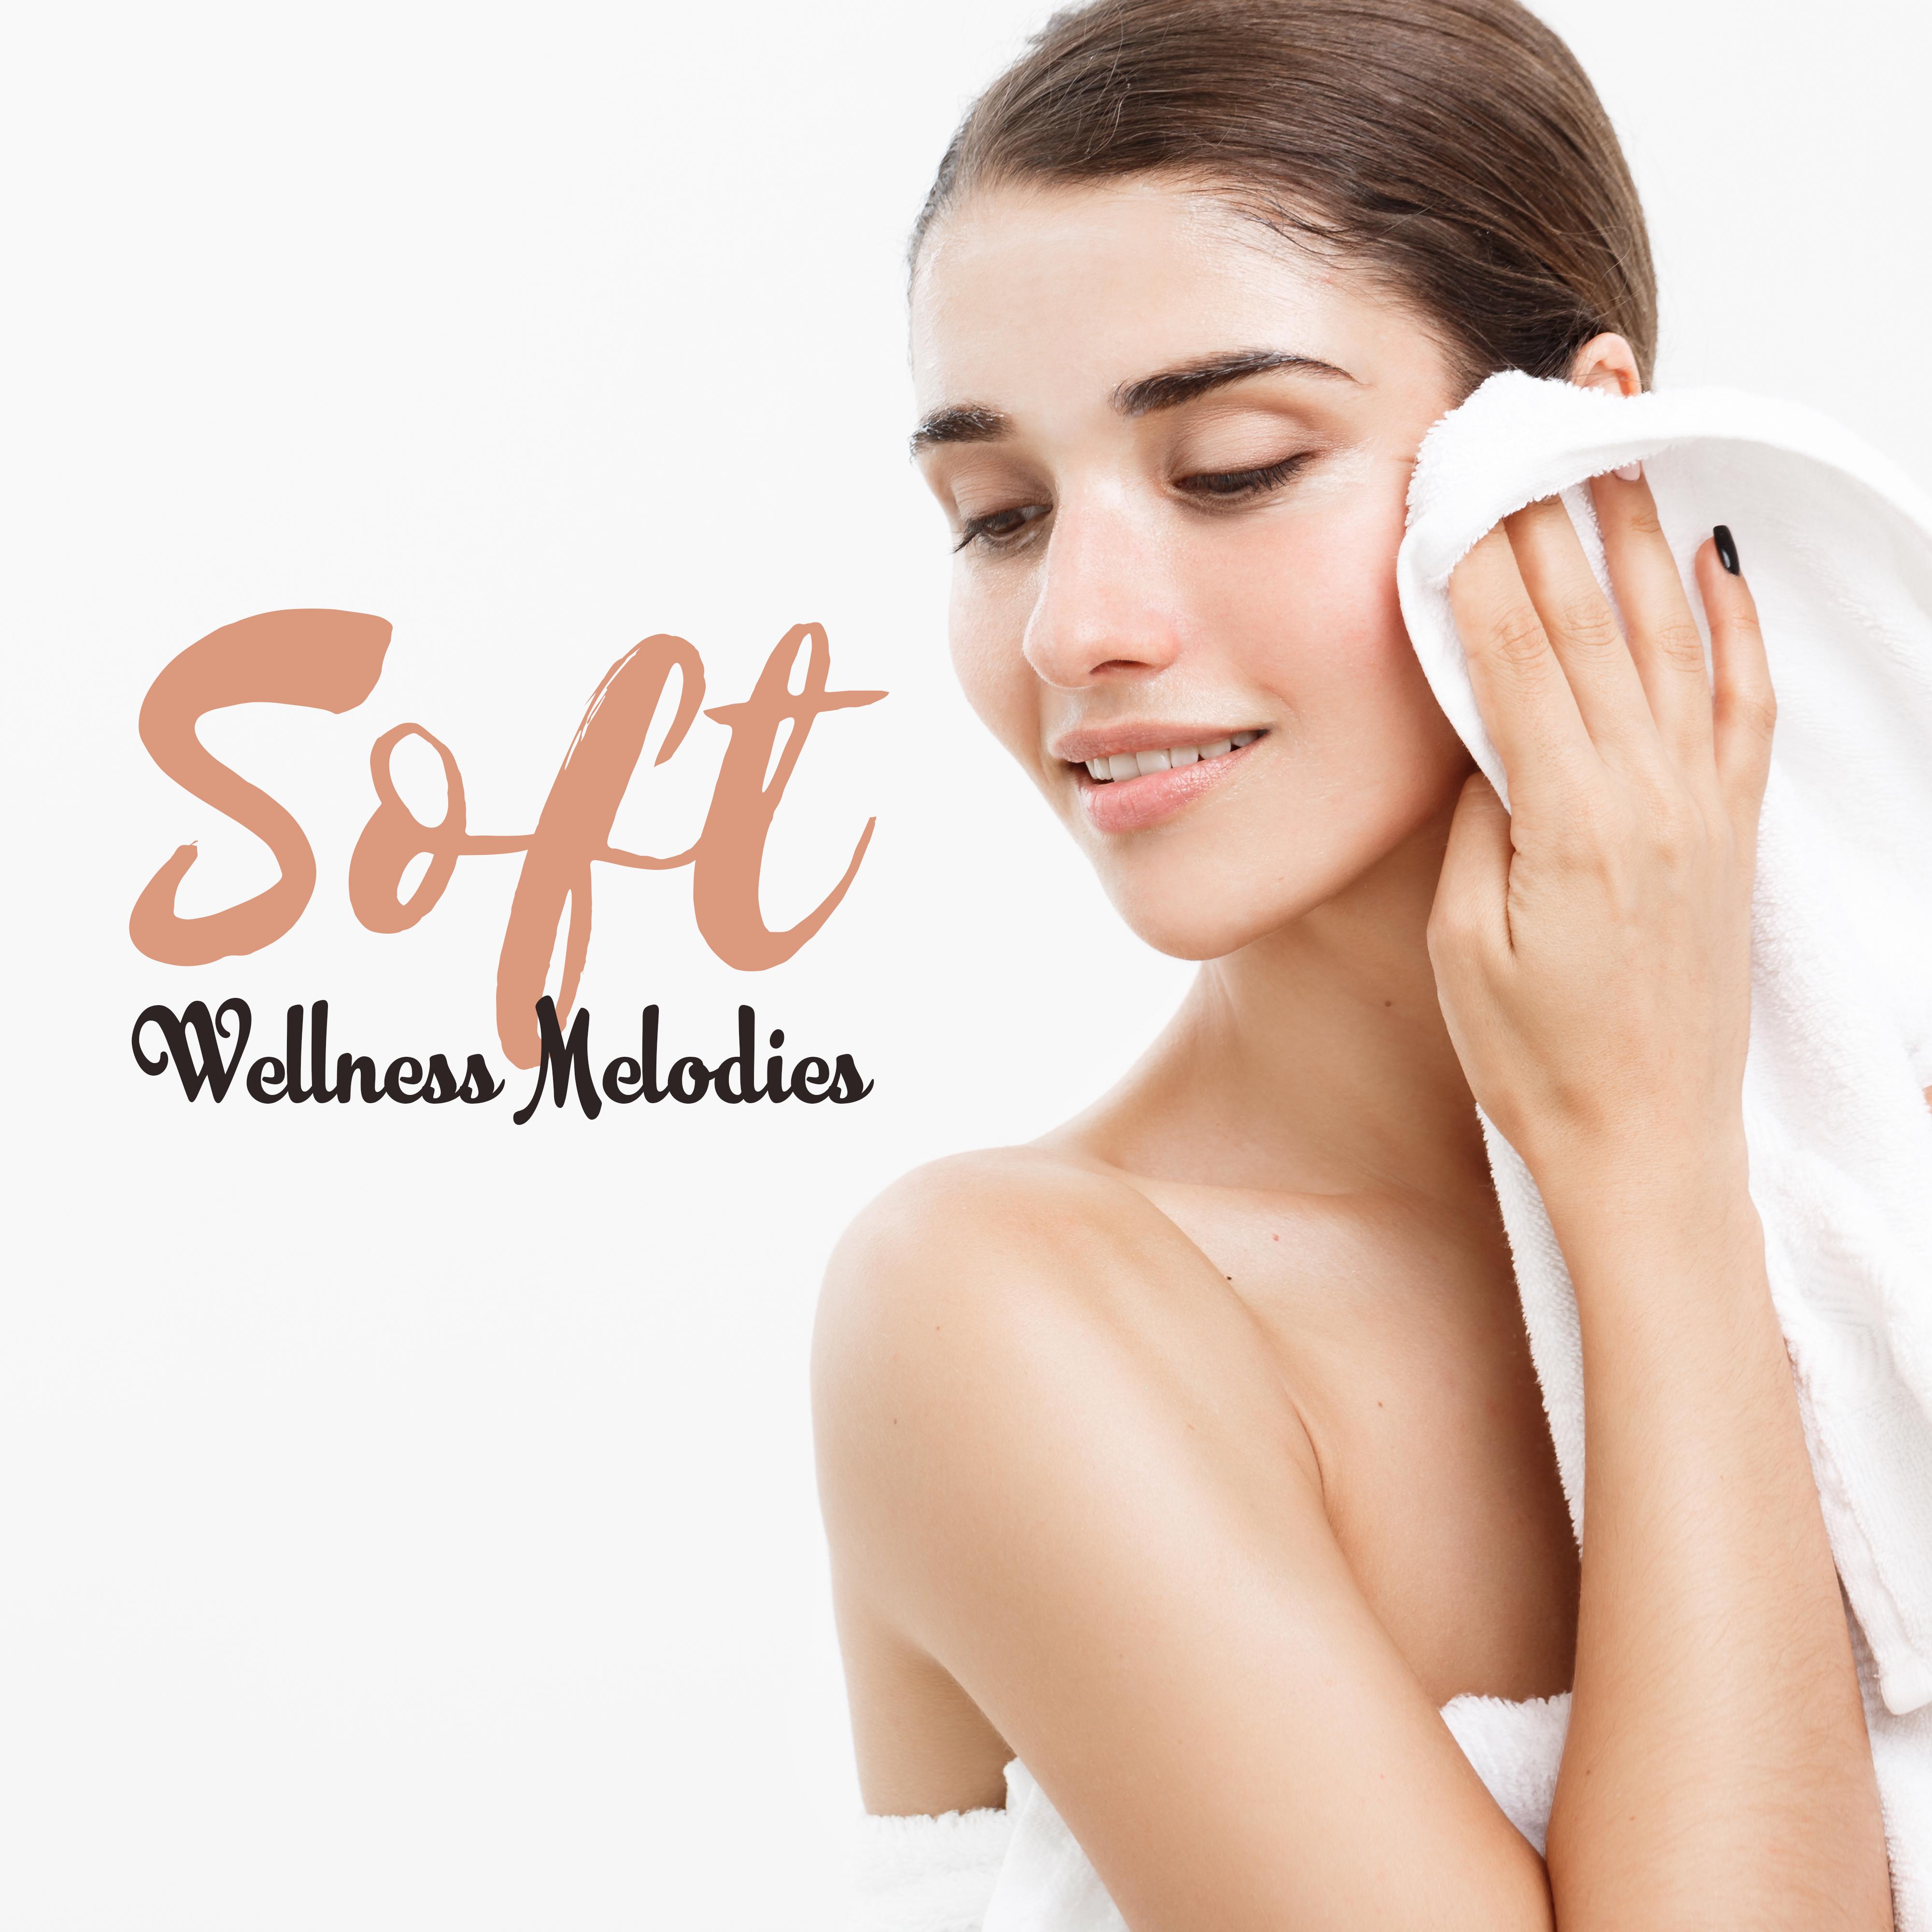 Soft Wellness Melodies